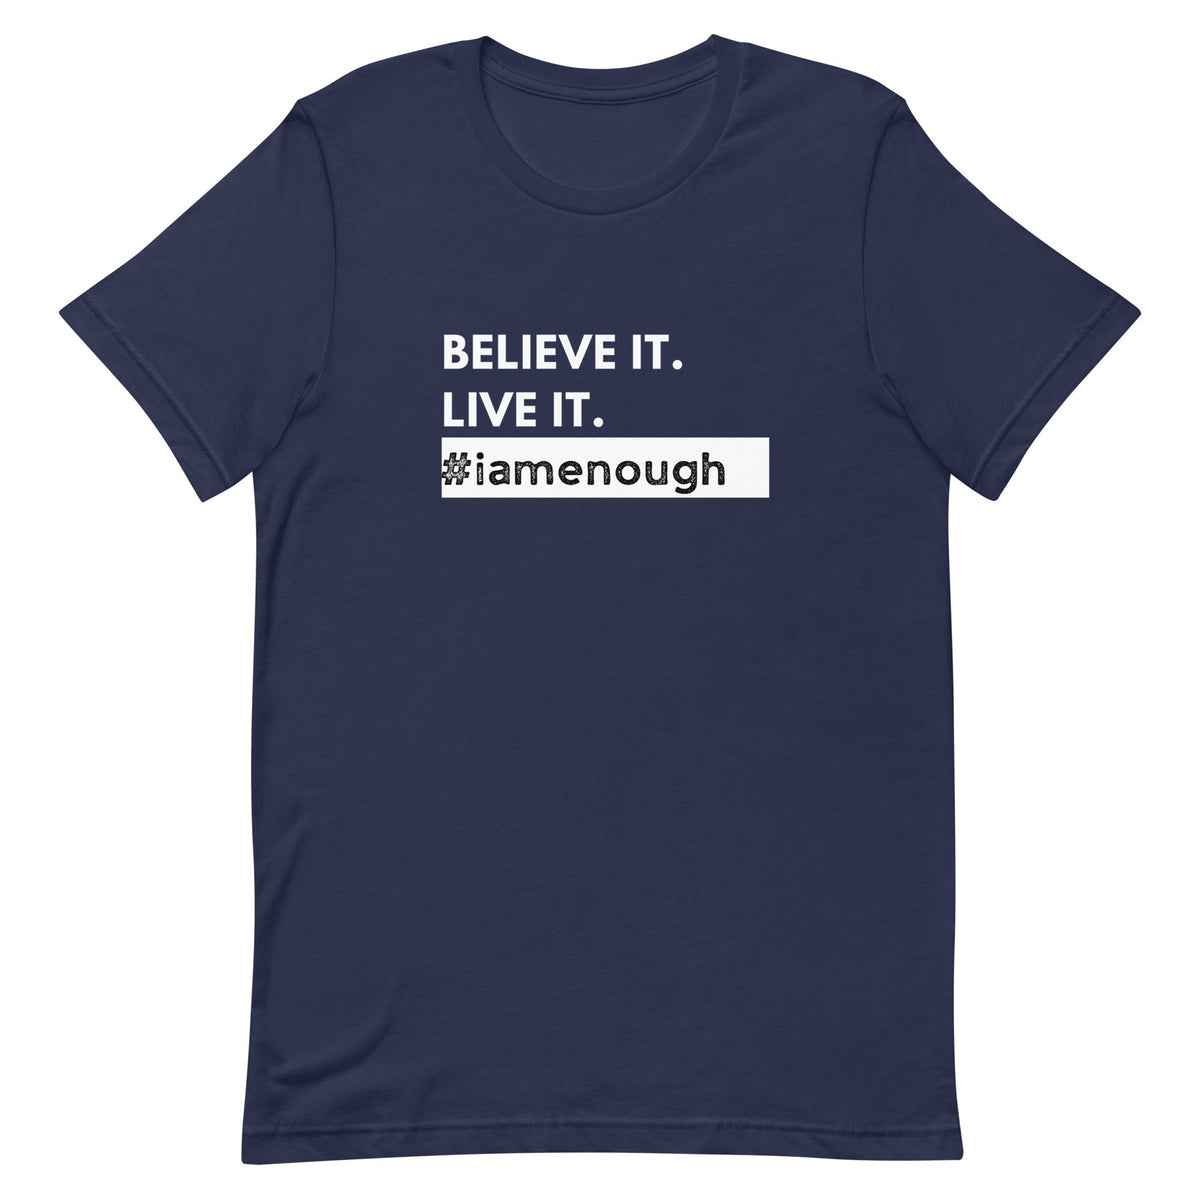 BELIEVE IT. LIVE IT. #iamenough - Motivational Affirmation Graphic Tee for Men